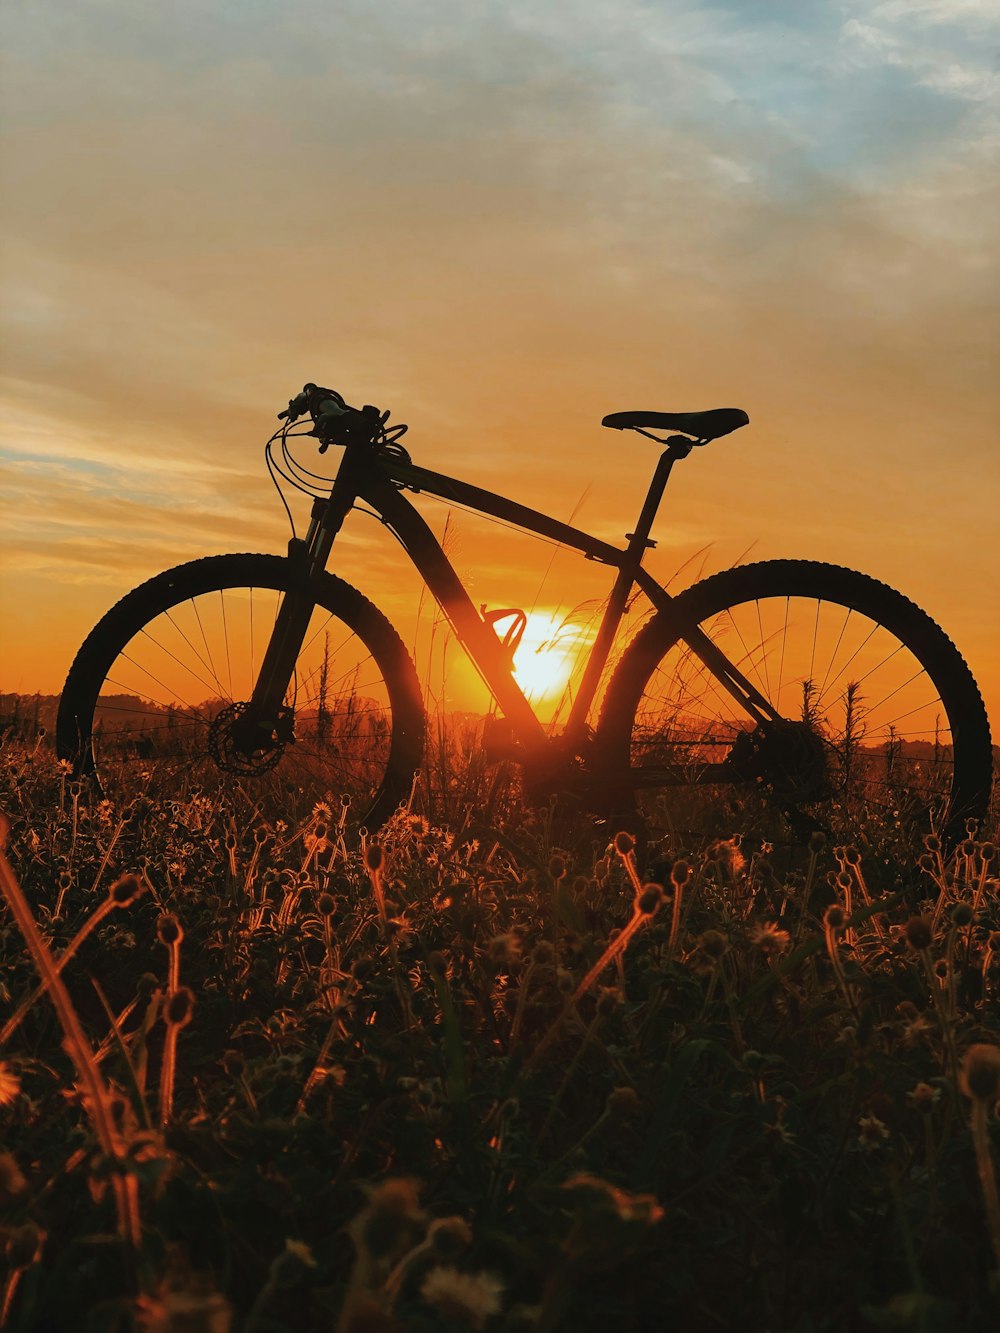 black mountain bike on brown grass field during sunset